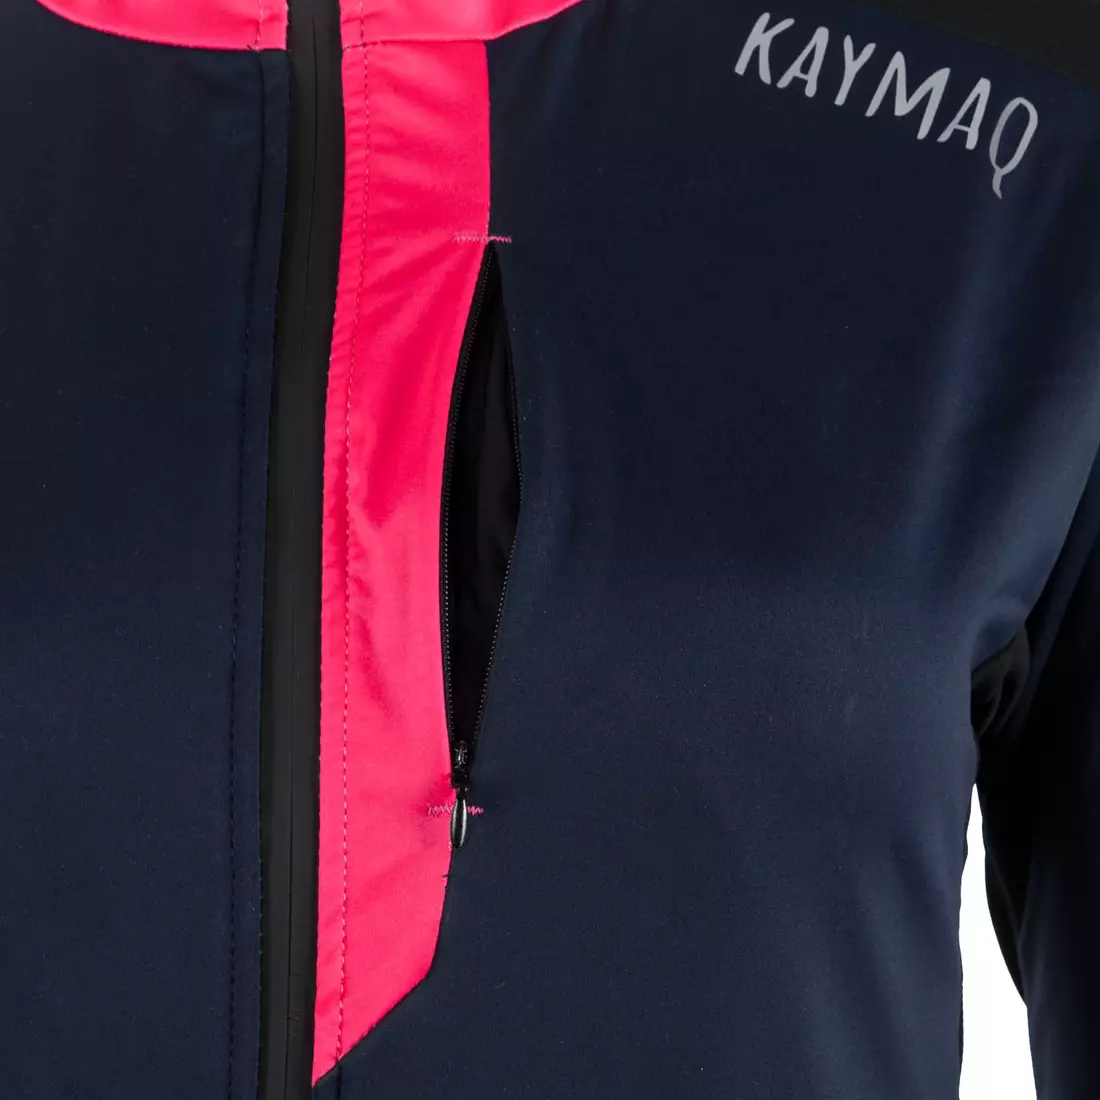 KAYMAQ JWSW-100 damen Winter Softshell Radjacke blau-schwarz